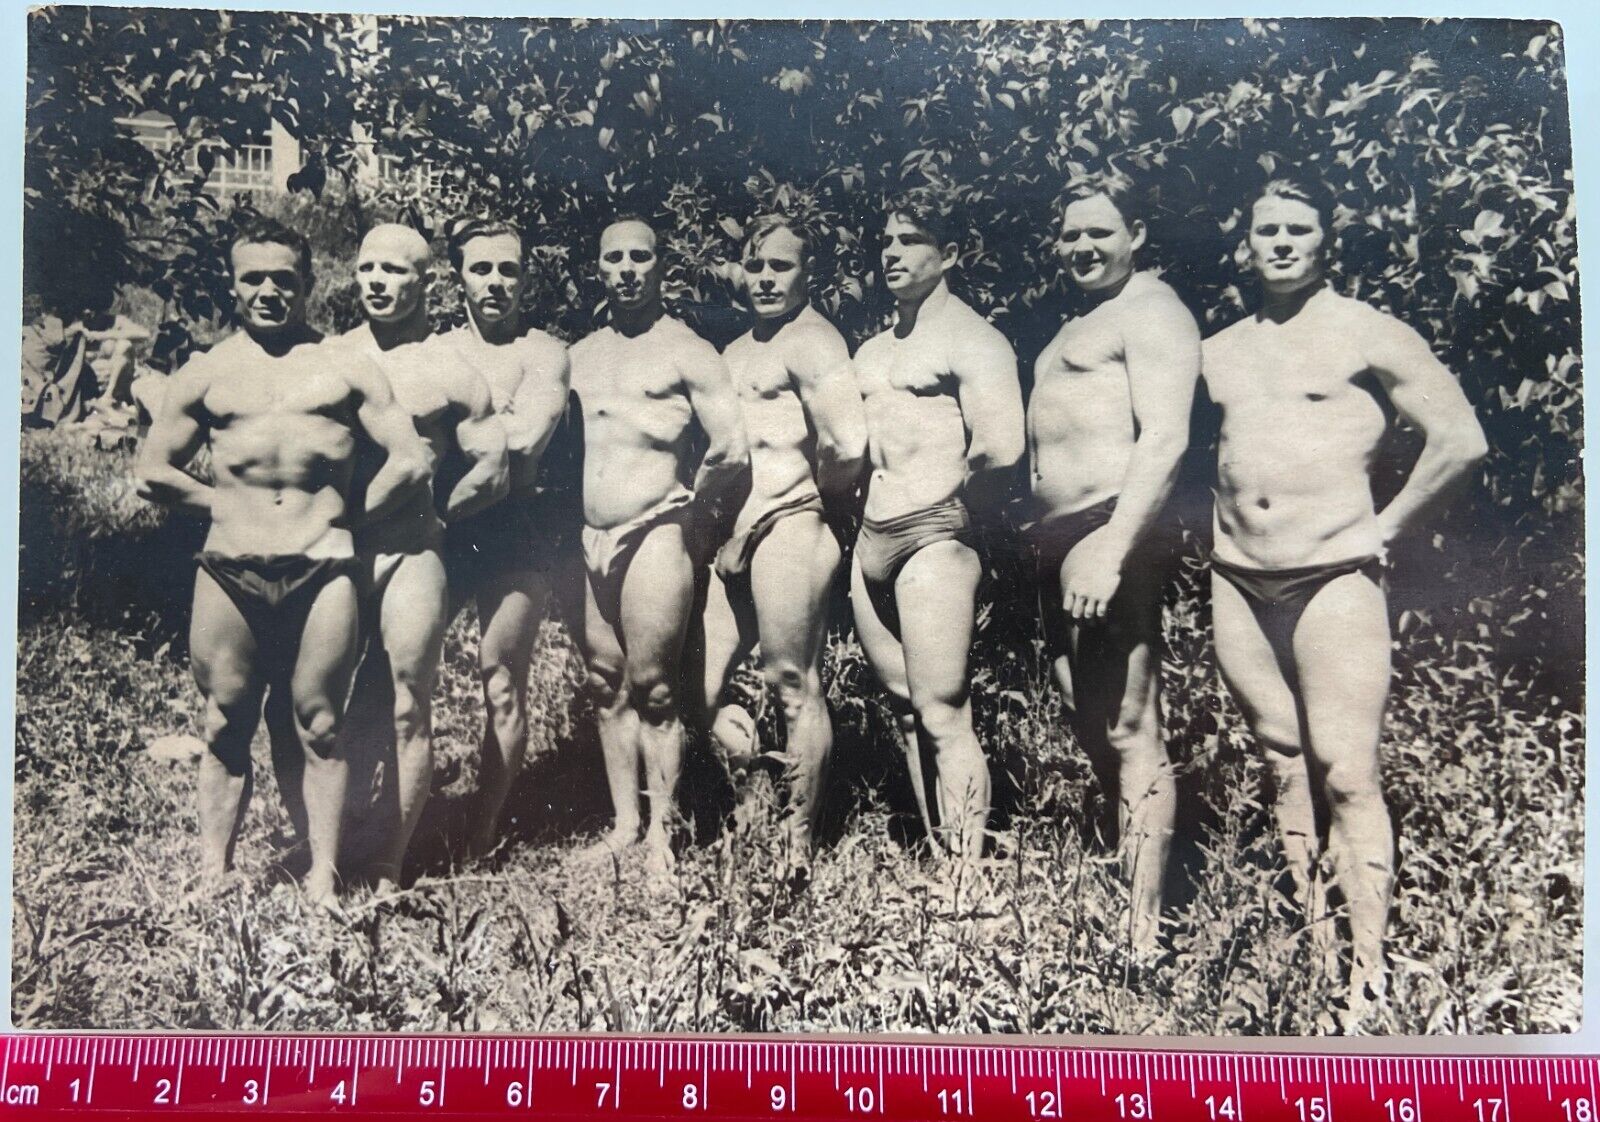 Shirtless Men Trunks Bulge Beefcake Affectionate Guys Gay Interest Vintage Photo